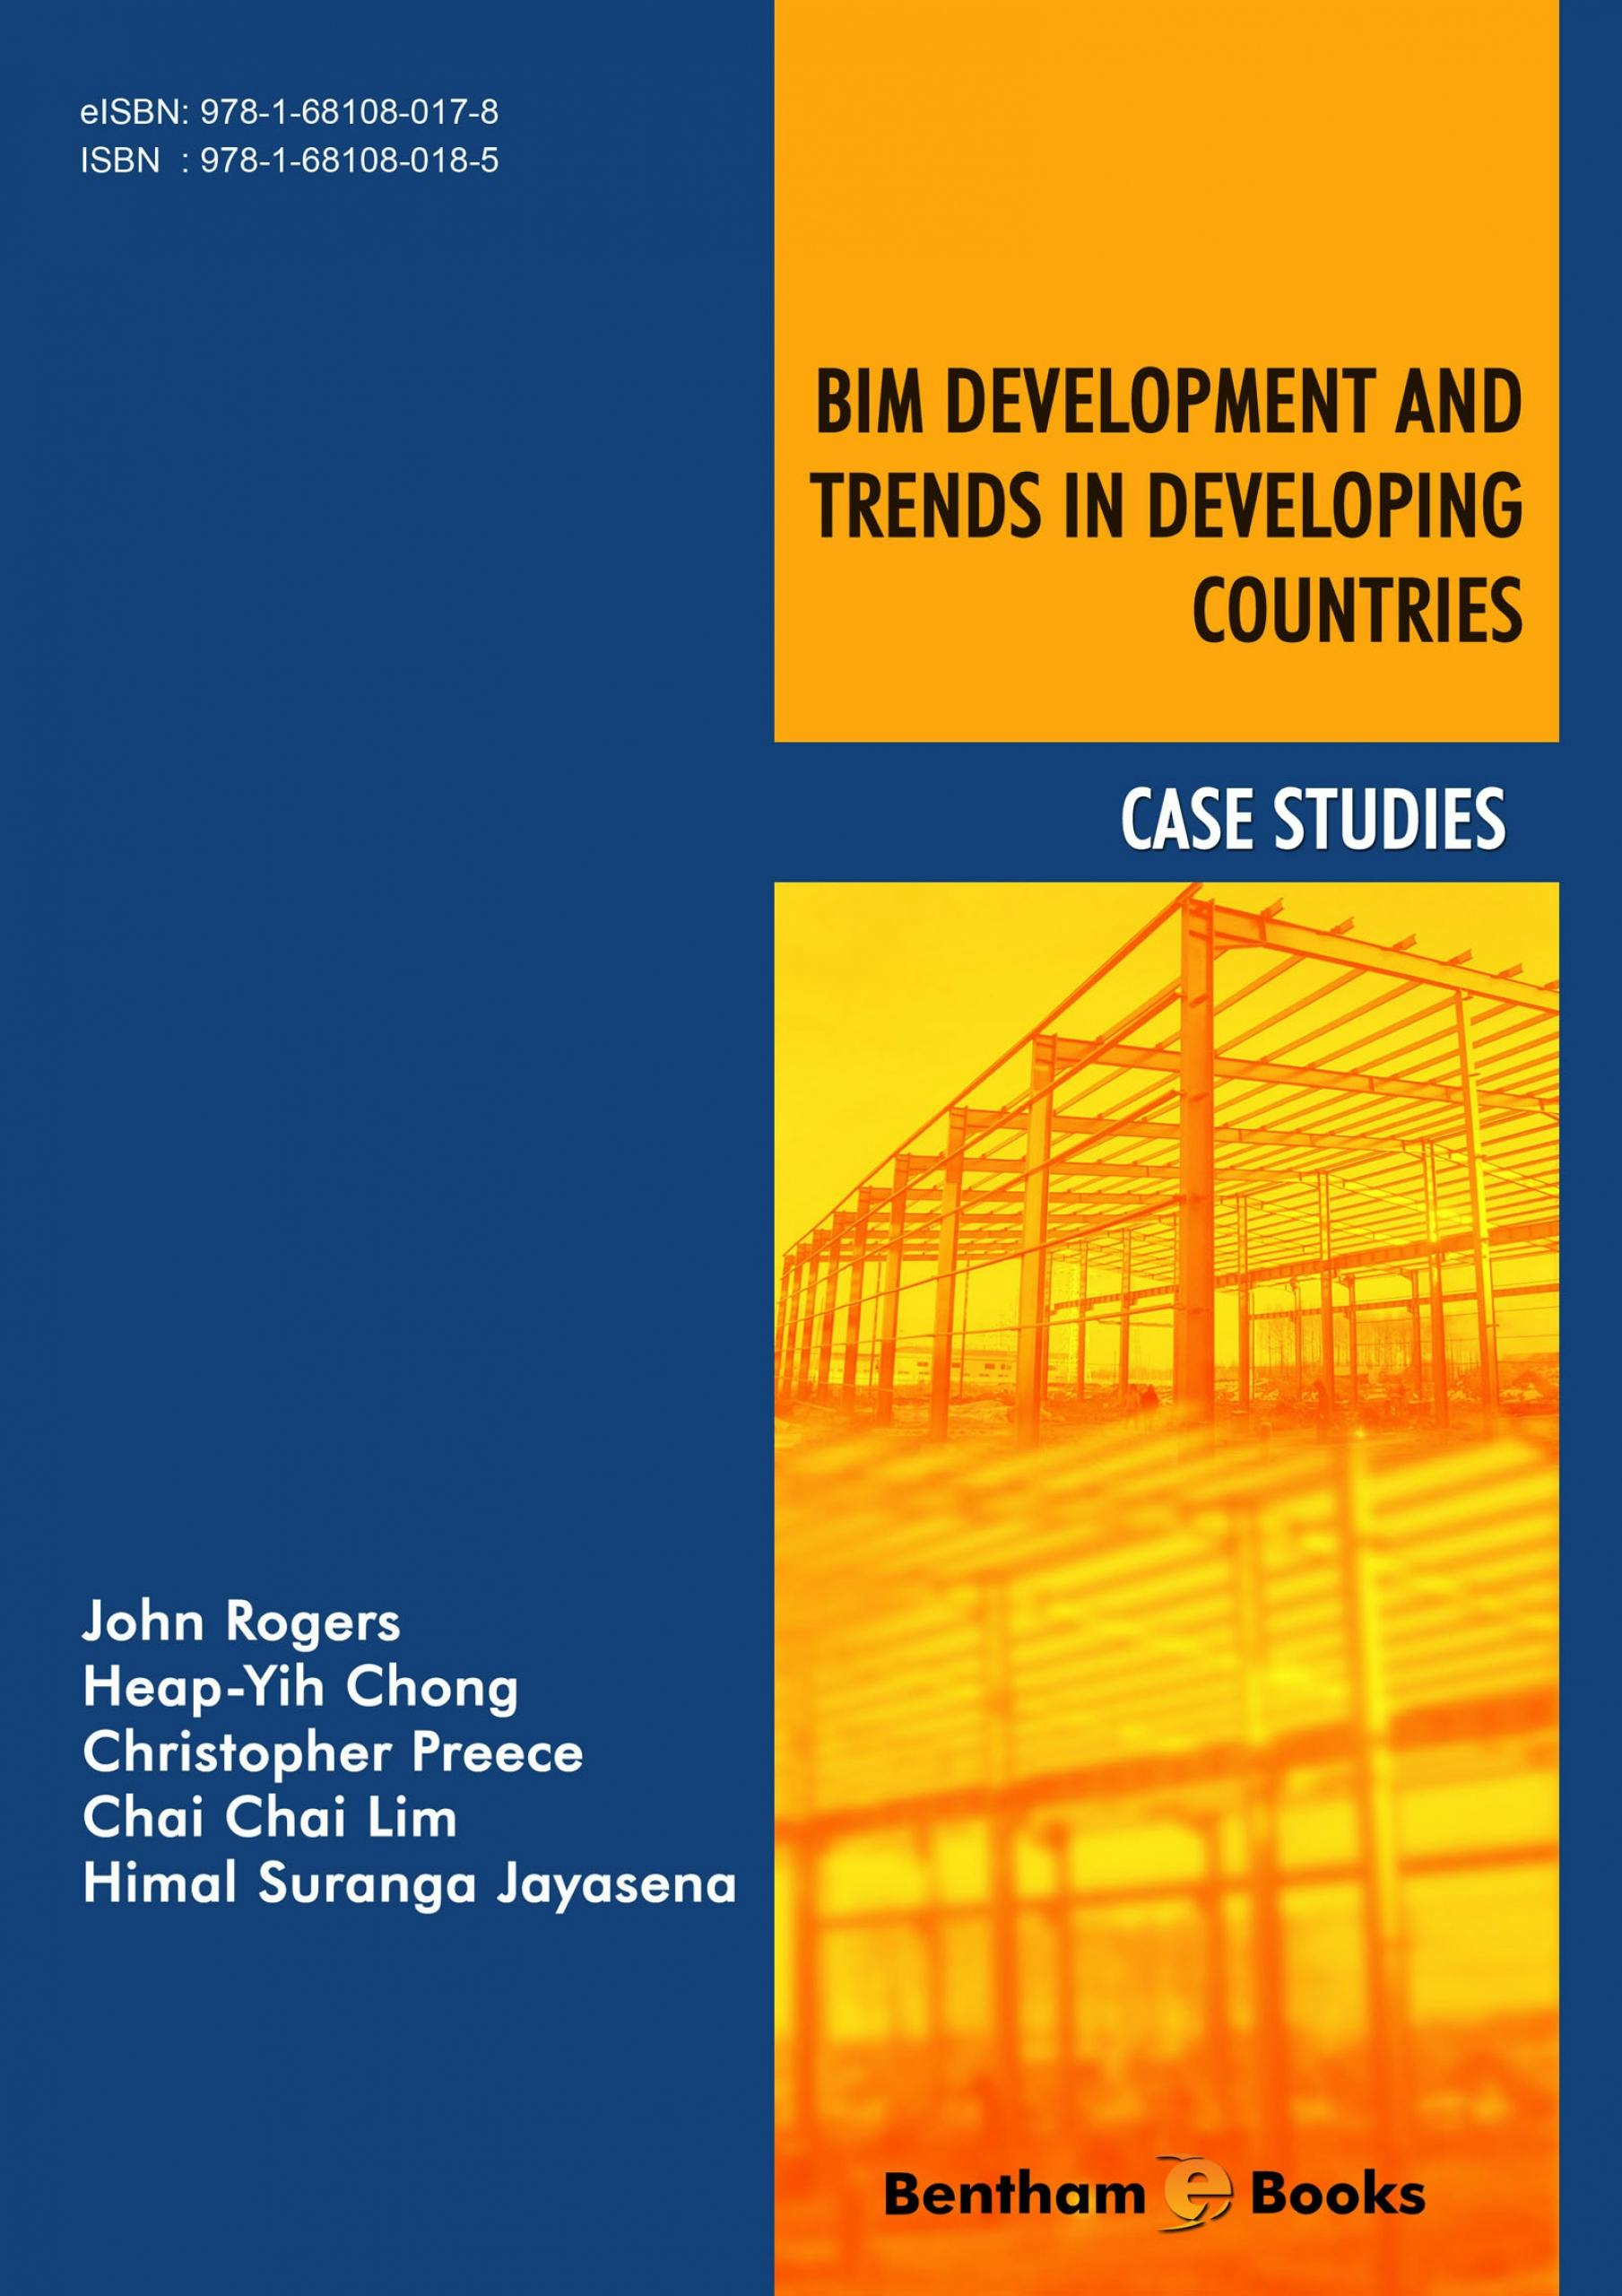 BIM Development and Trends in Developing Countries: Case Studies - John Rogers, Heap-Yih Chong, Himal Suranga Jayasena